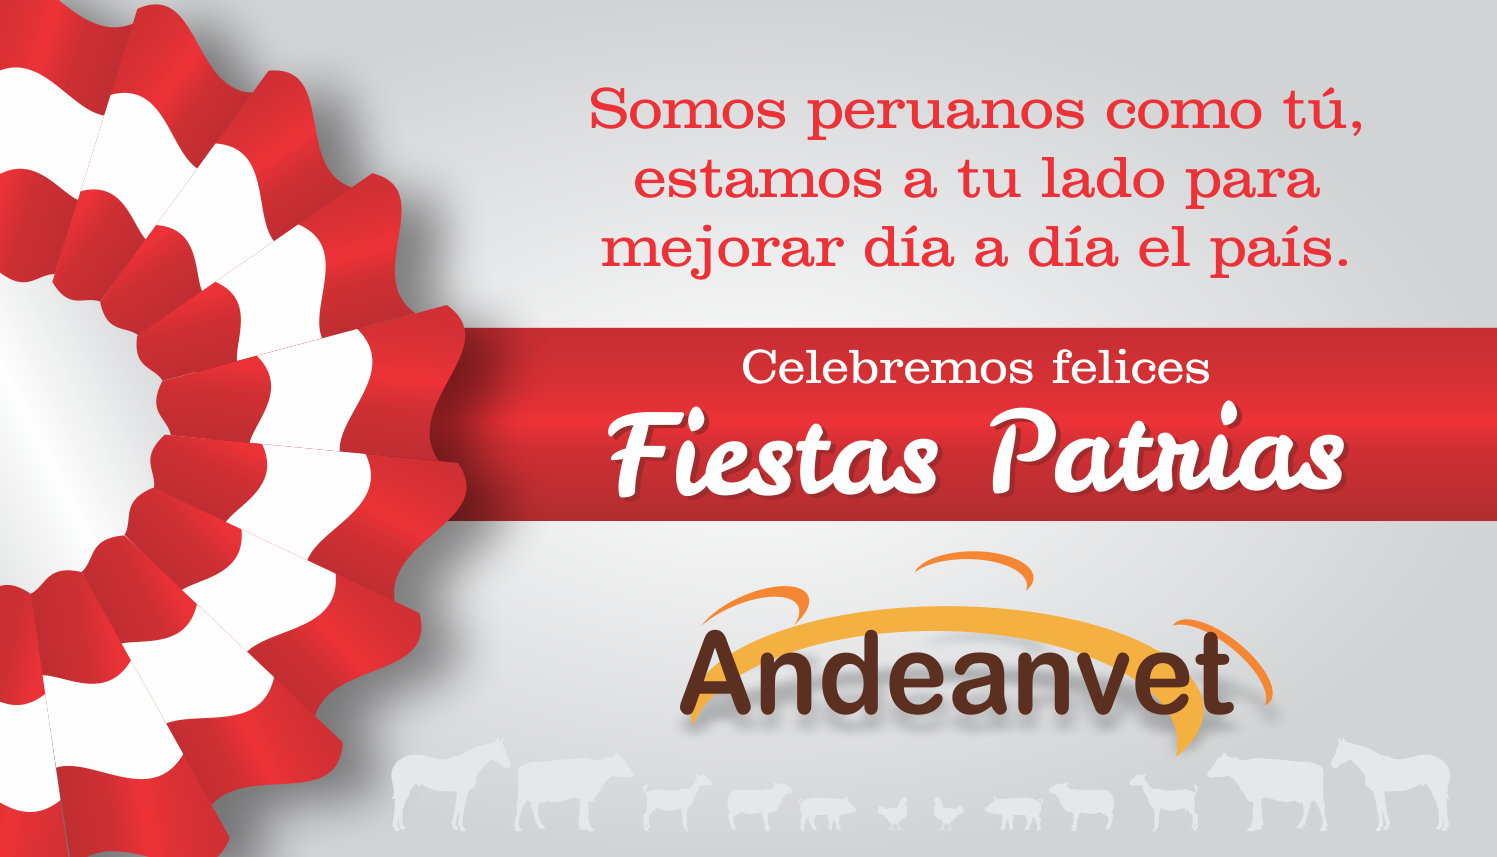 Andeanvet celebra las fiestas patrias